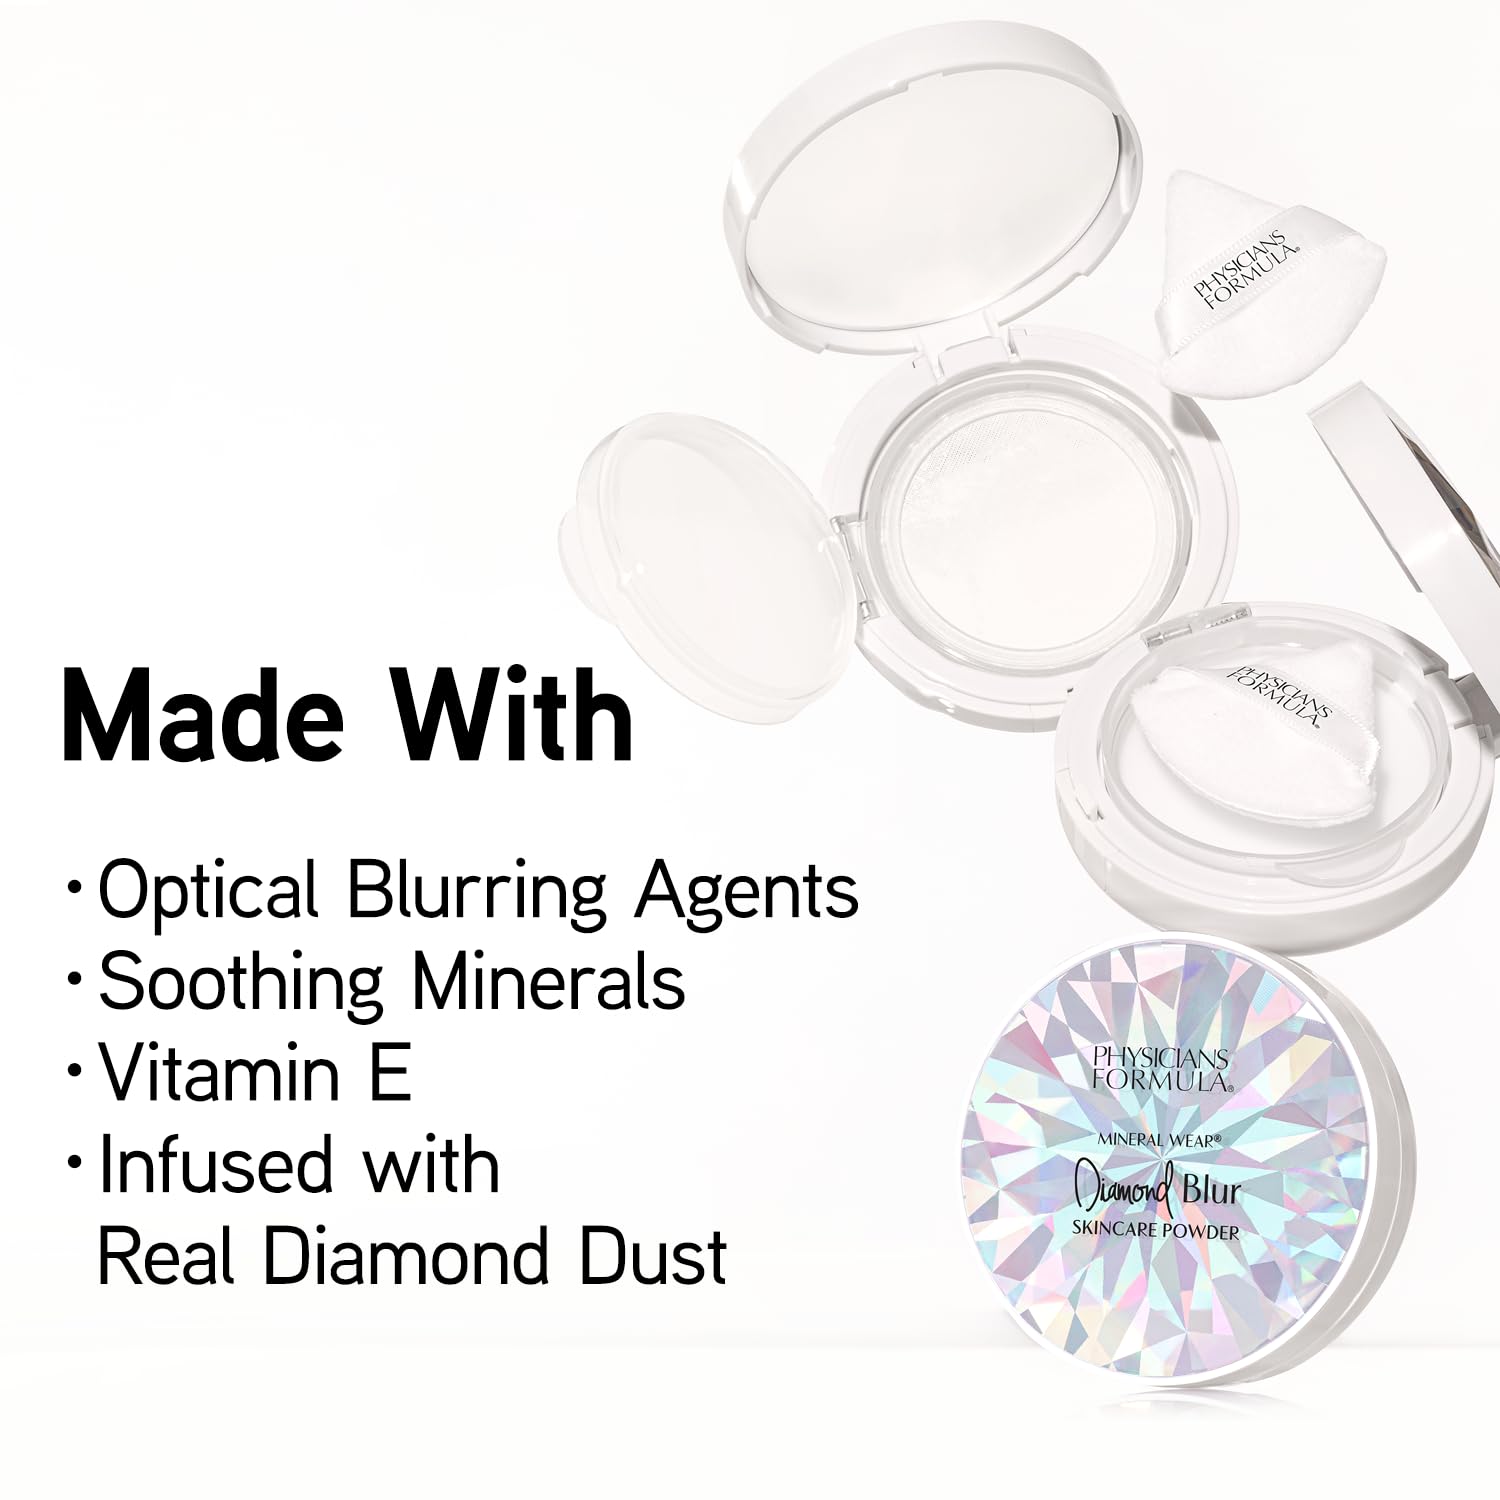 Physicians Formula Mineral Wear® Diamond Blur Skincare Powder - Translucent